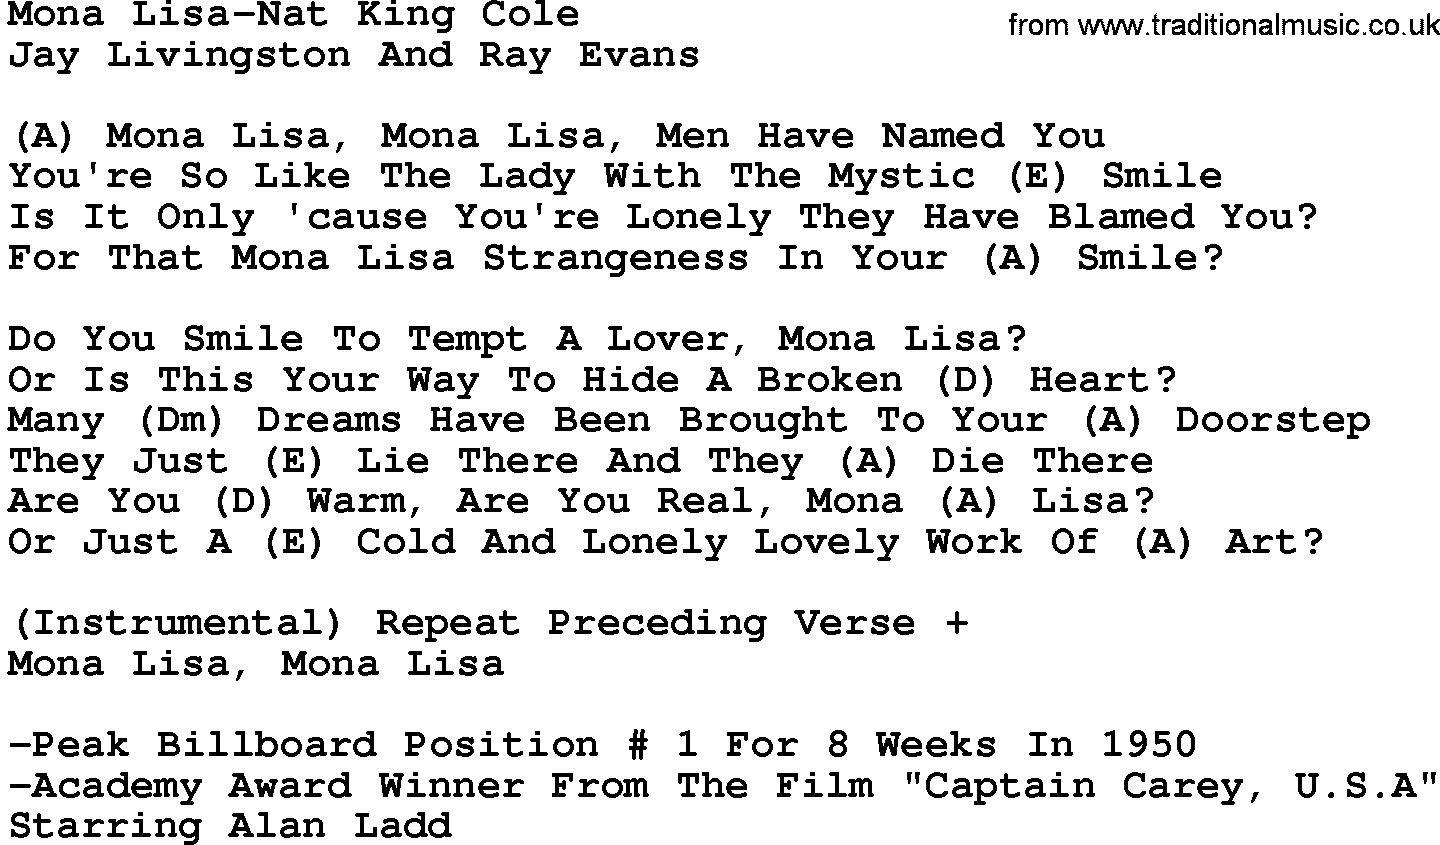 Country Music:Mona Lisa-Nat King Cole Lyrics and Chords1440 x 845